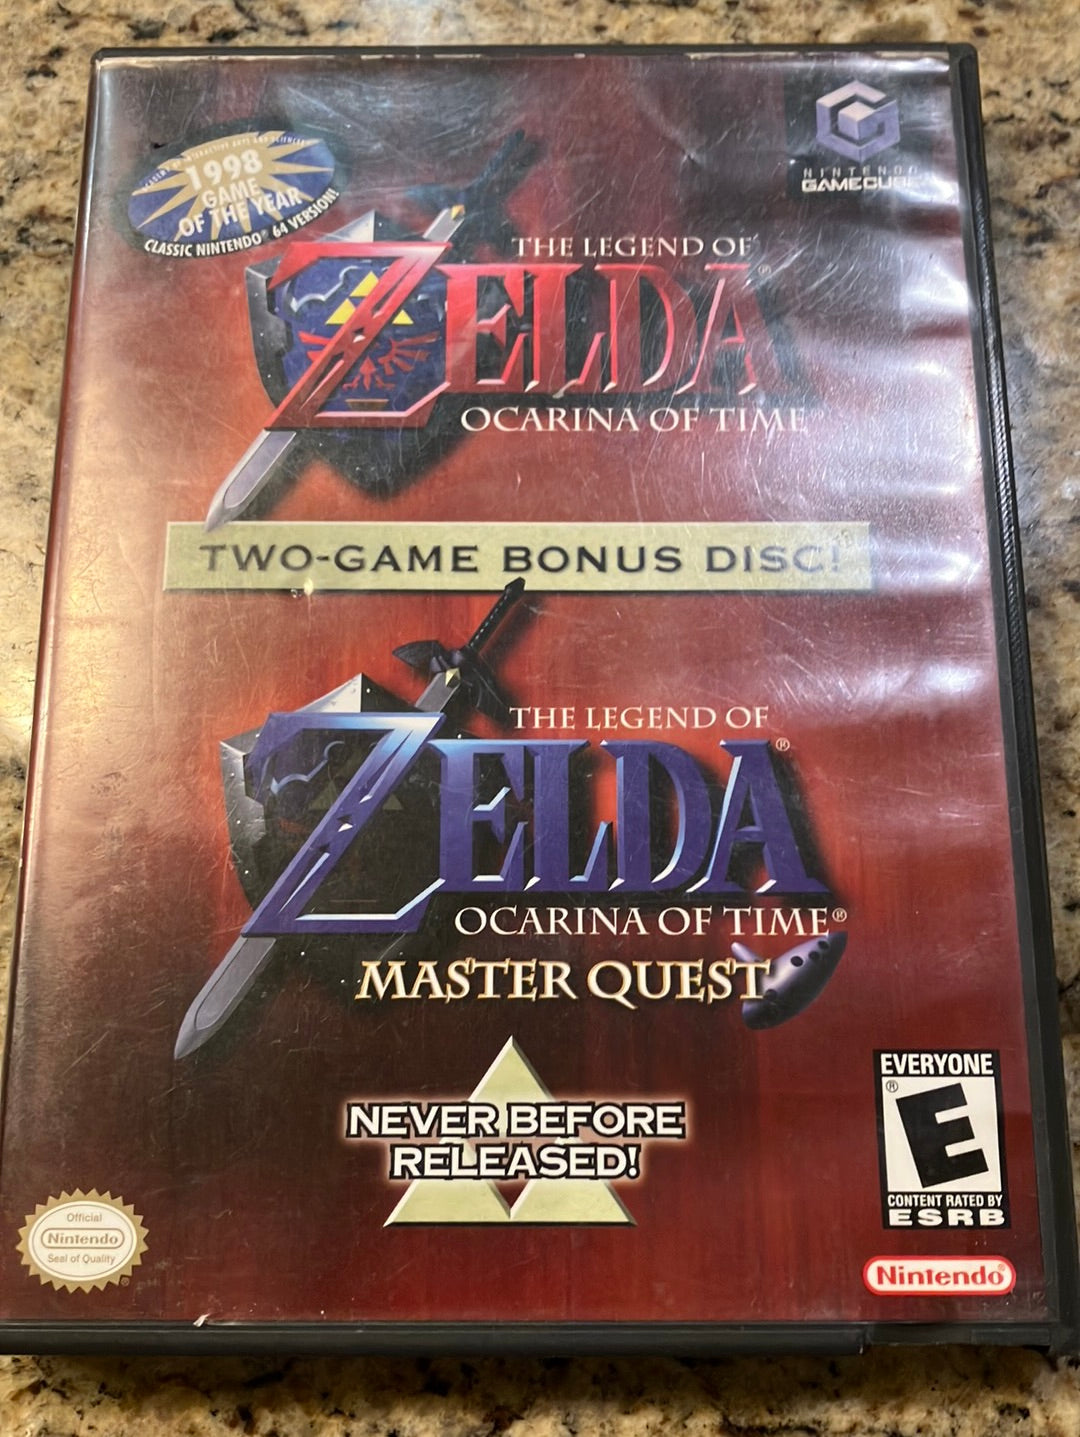 The Legend of Zelda Ocarina of Time (Two-Game Bonus Disc!)